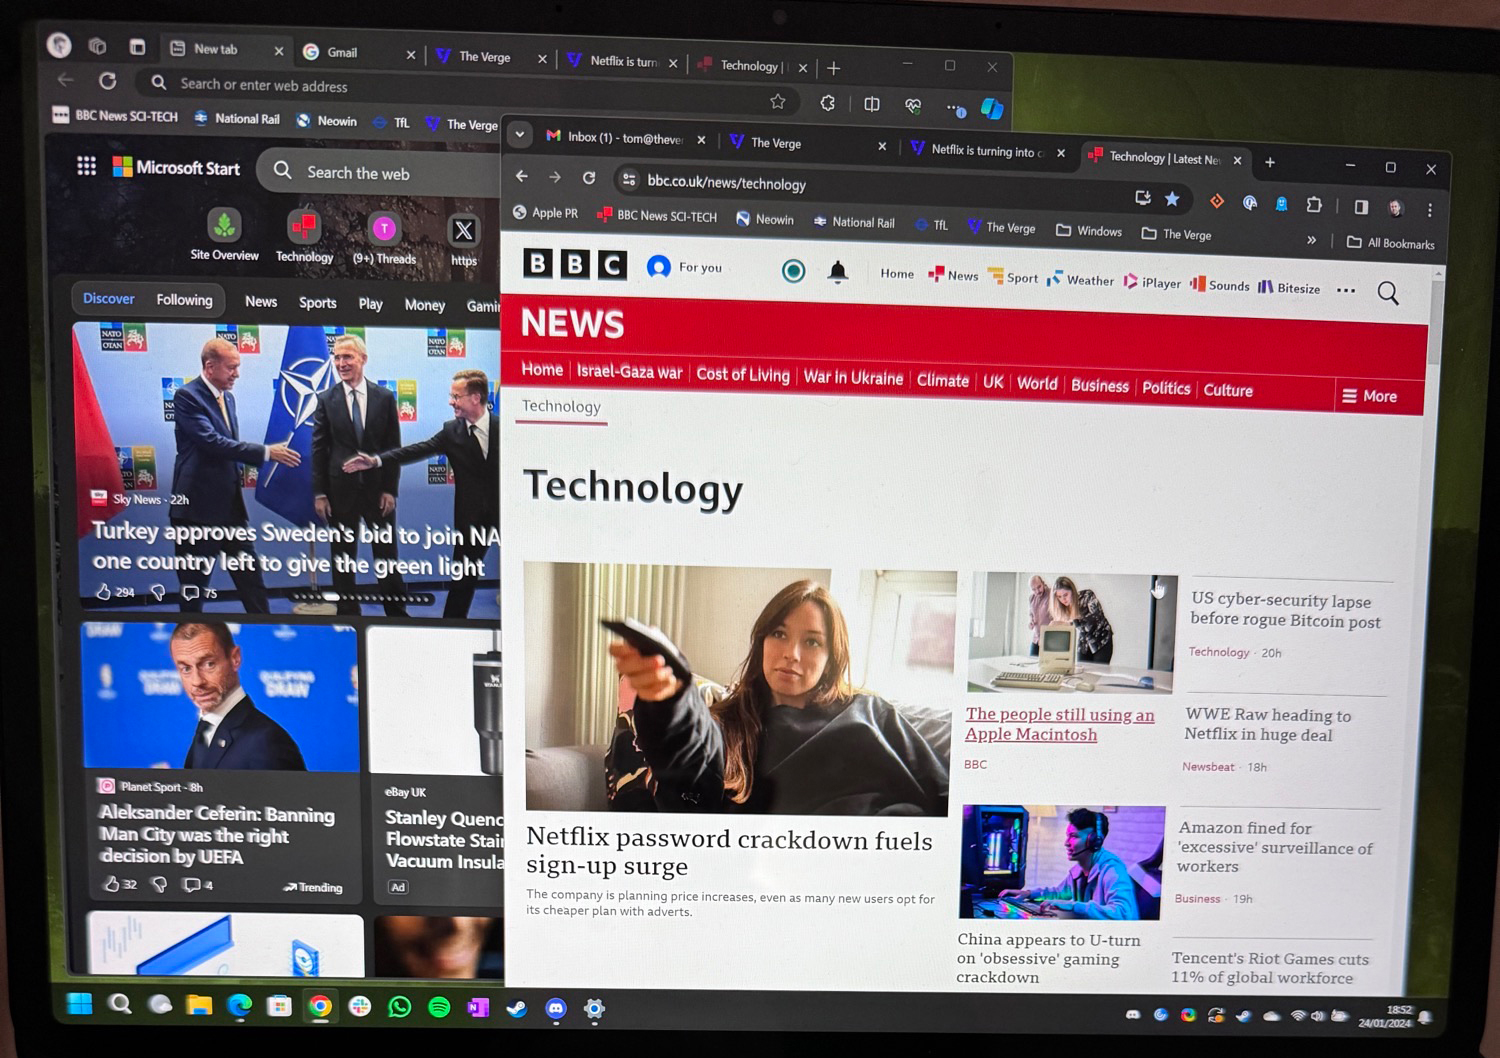 The Microsoft Edge browser 